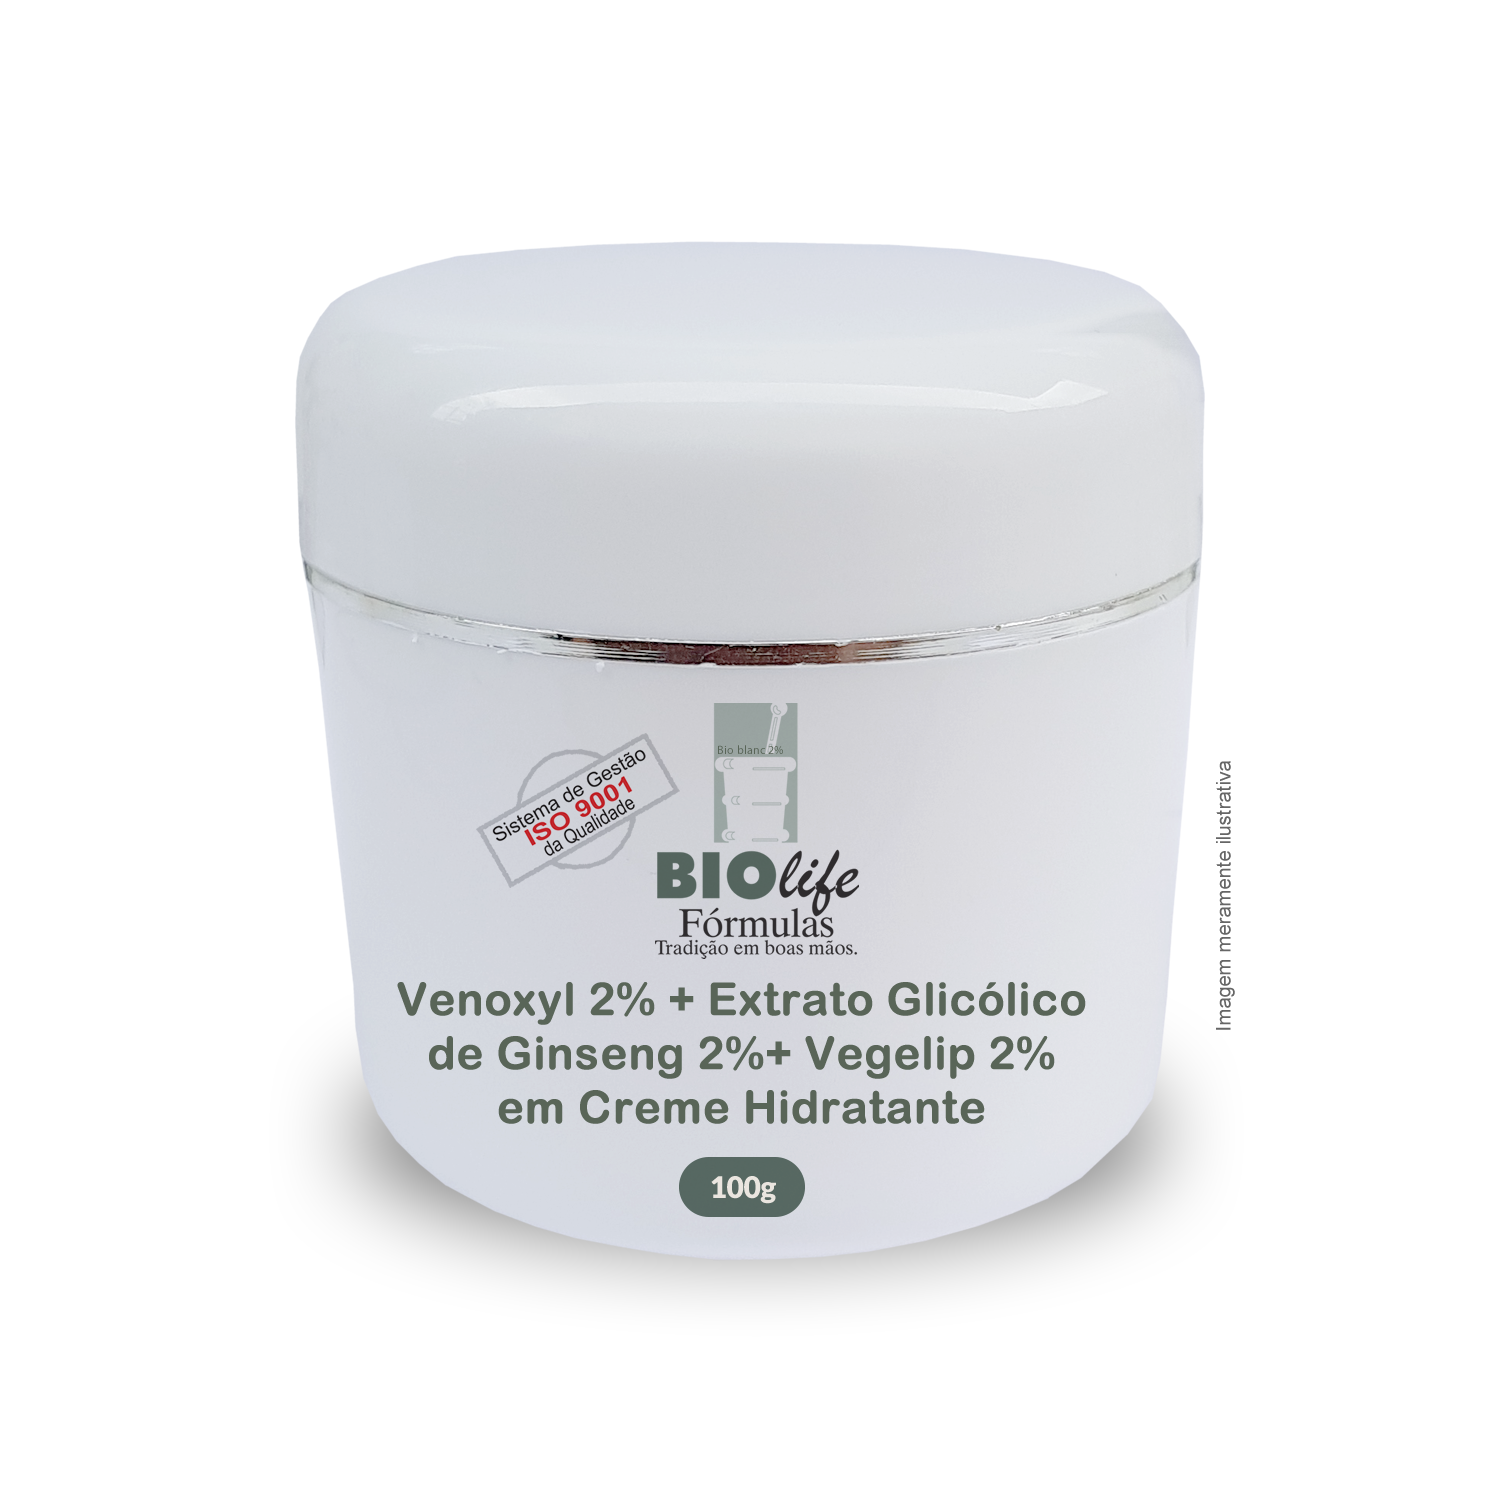 Venoxyl 2% + Extrato Glicólico de Ginseng 2%+ Vegelip 2% + Creme Hidratante qsp 100g - BioLife